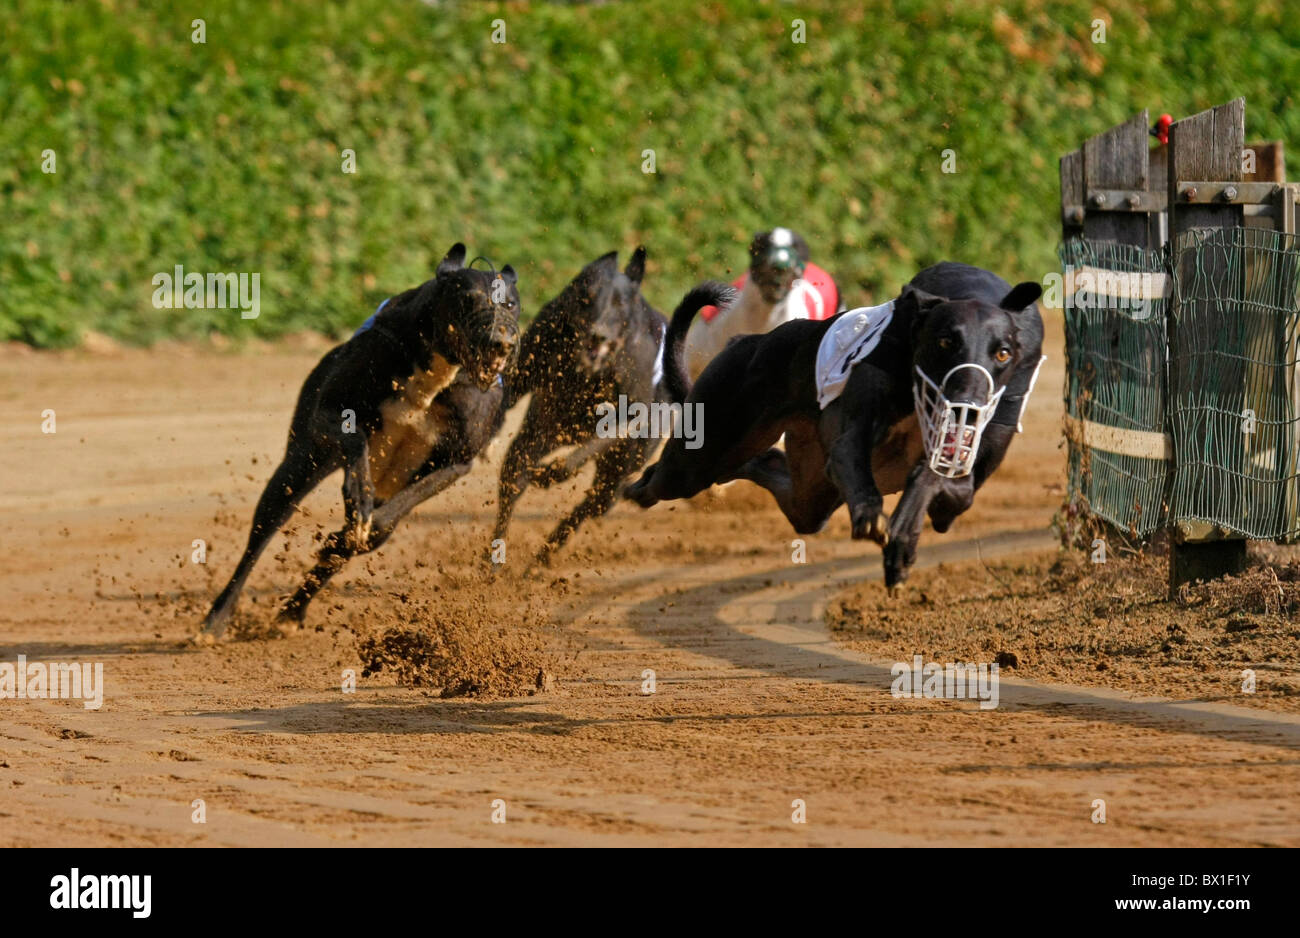 Greyhound racing Stock Photo